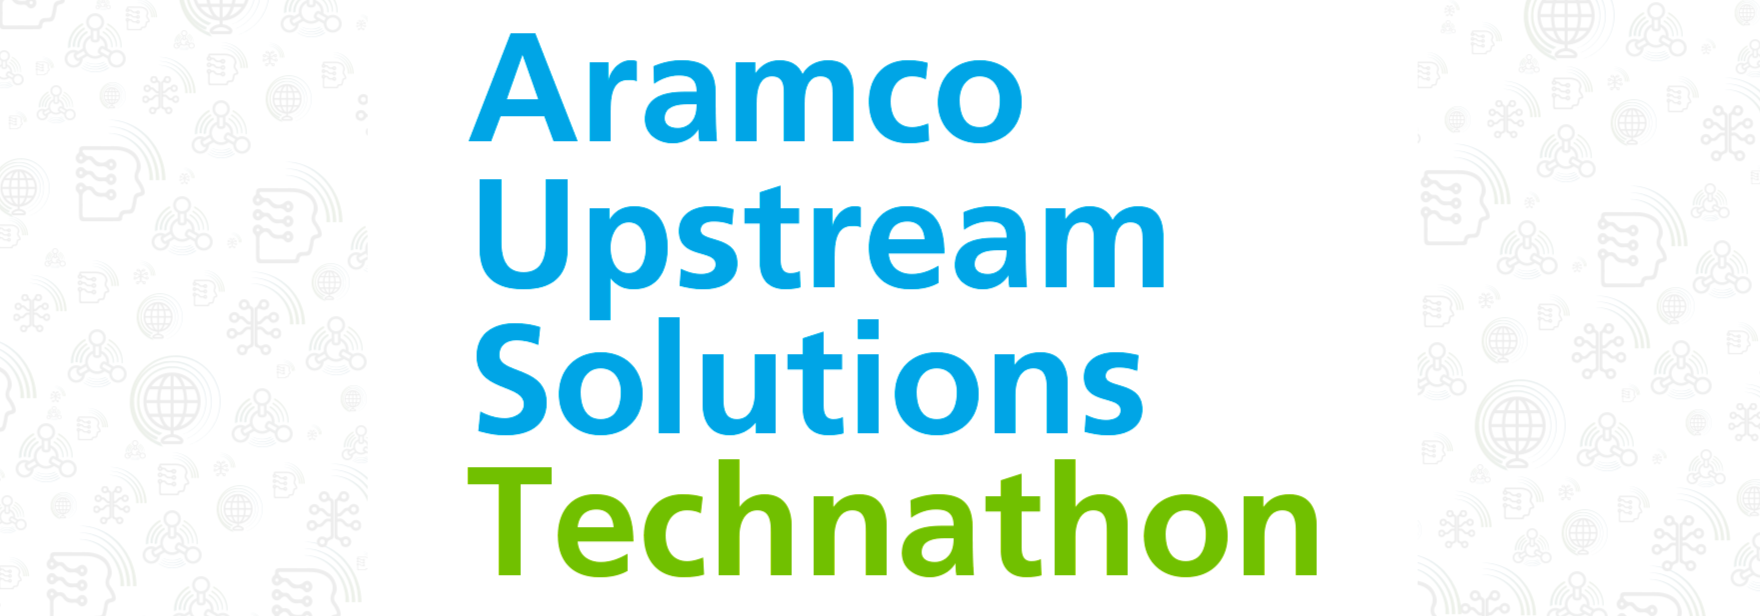 Aramco Upstream Solutions Technathon 2020